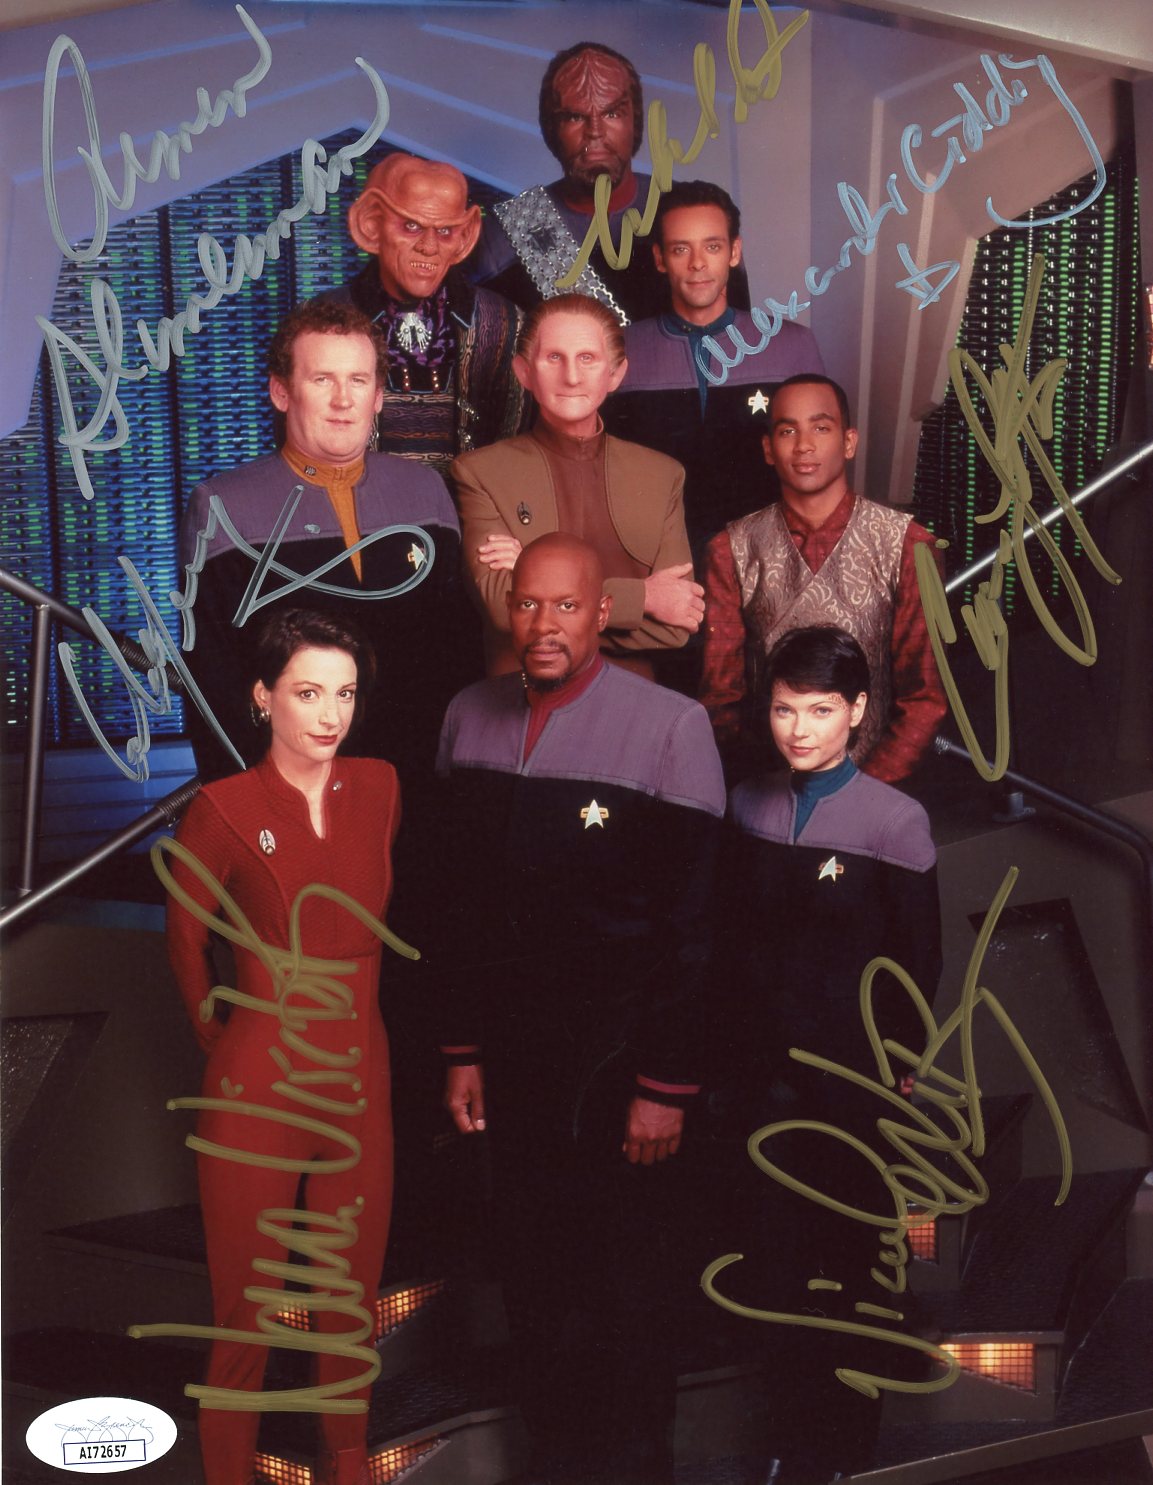 Star Trek: DS9 8x10 Photo Signed Dorn Farrell Lofton Meaney Shimerman Siddig Visitor Autograph JSA Certified COA